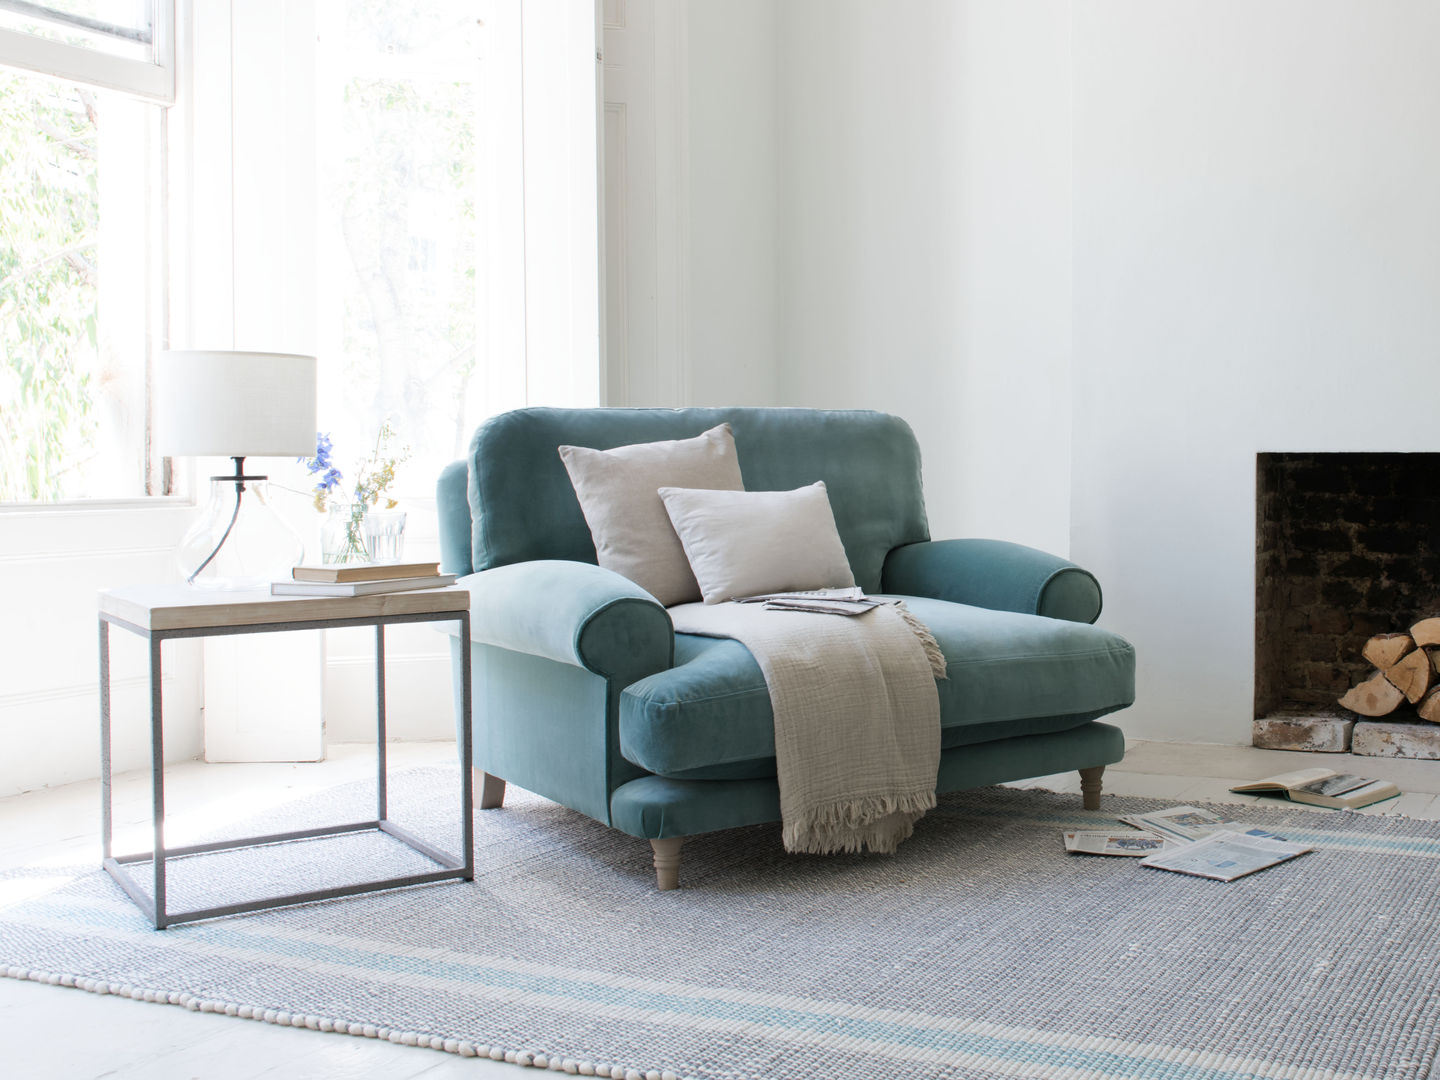 Slowcoach love seat Loaf Modern living room armchair,teal,green,sea blue,velvet,love seat,living room,sofa